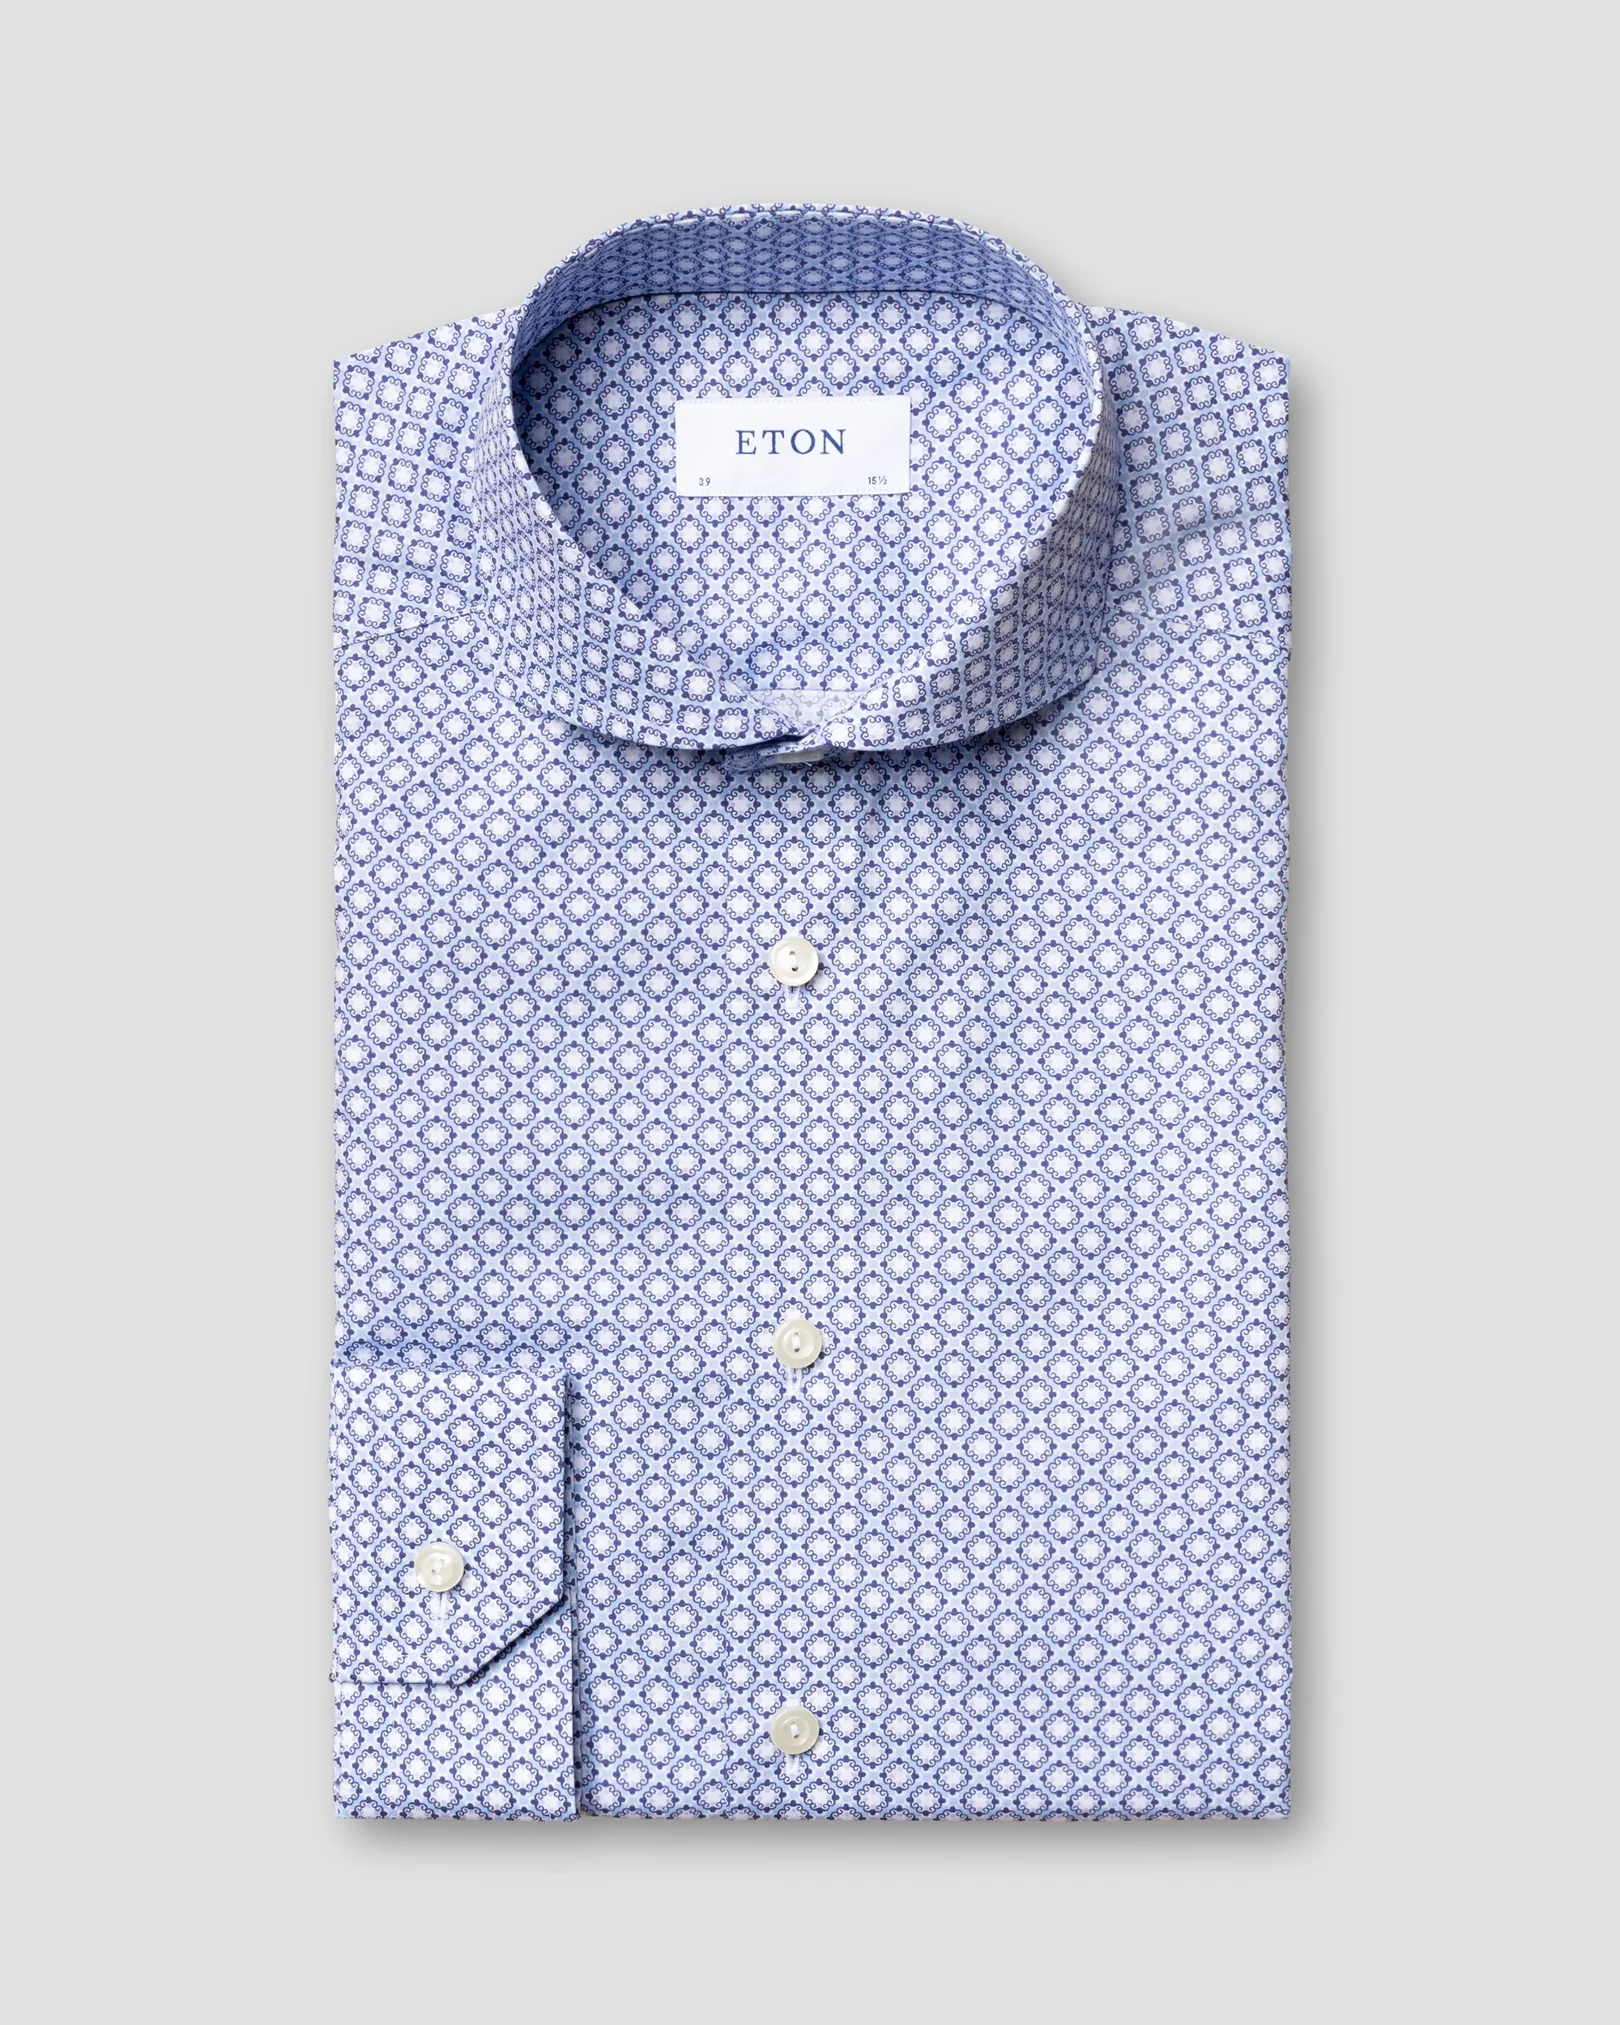 Eton - blue block print poplin shirt extreme cut away